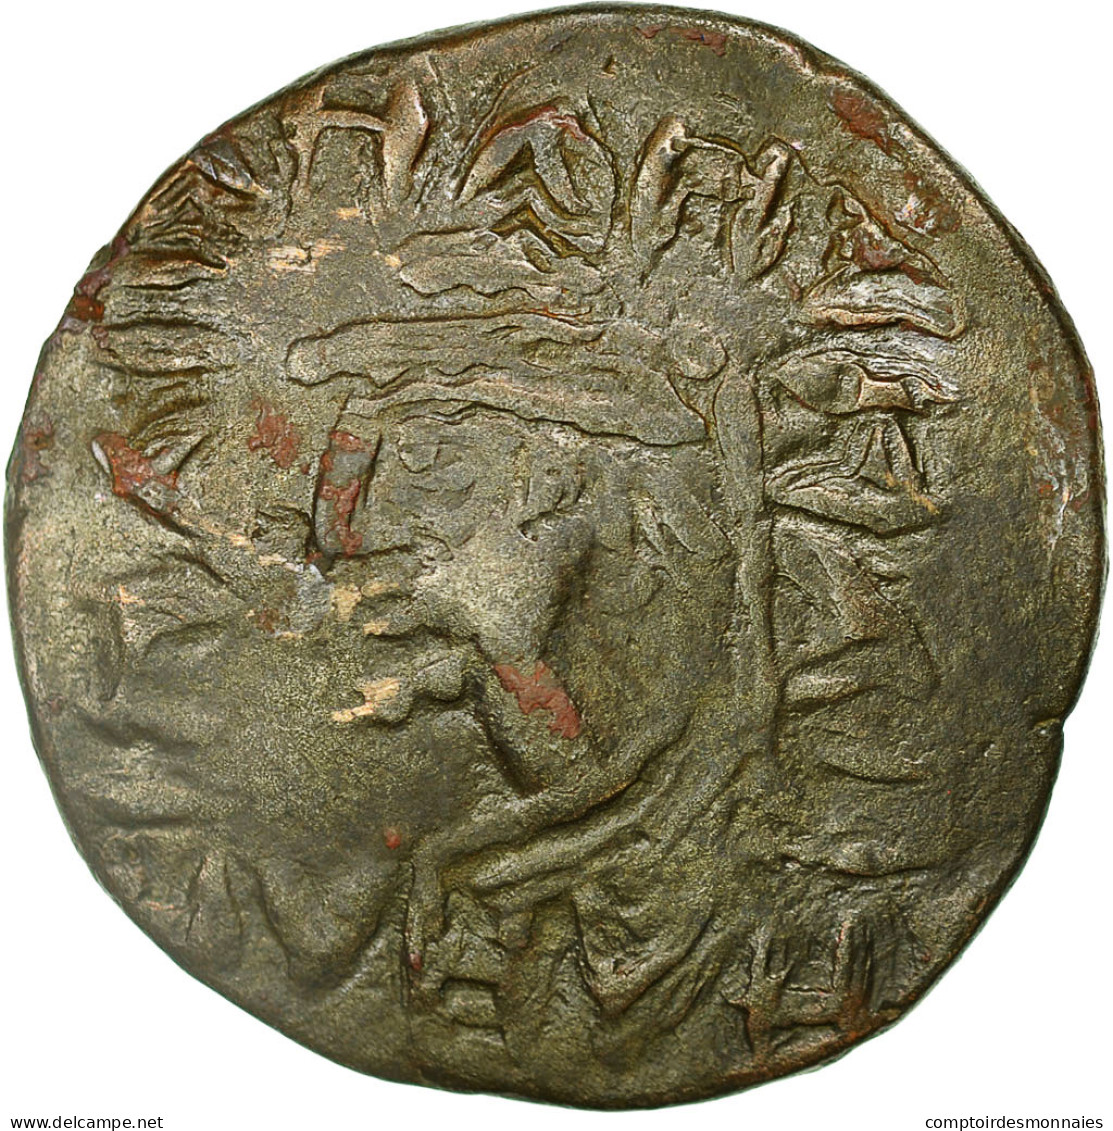 Monnaie, Elymais, Kamnaskires VI, Tétradrachme, 1st Century AD, TTB, Billon - Orientales